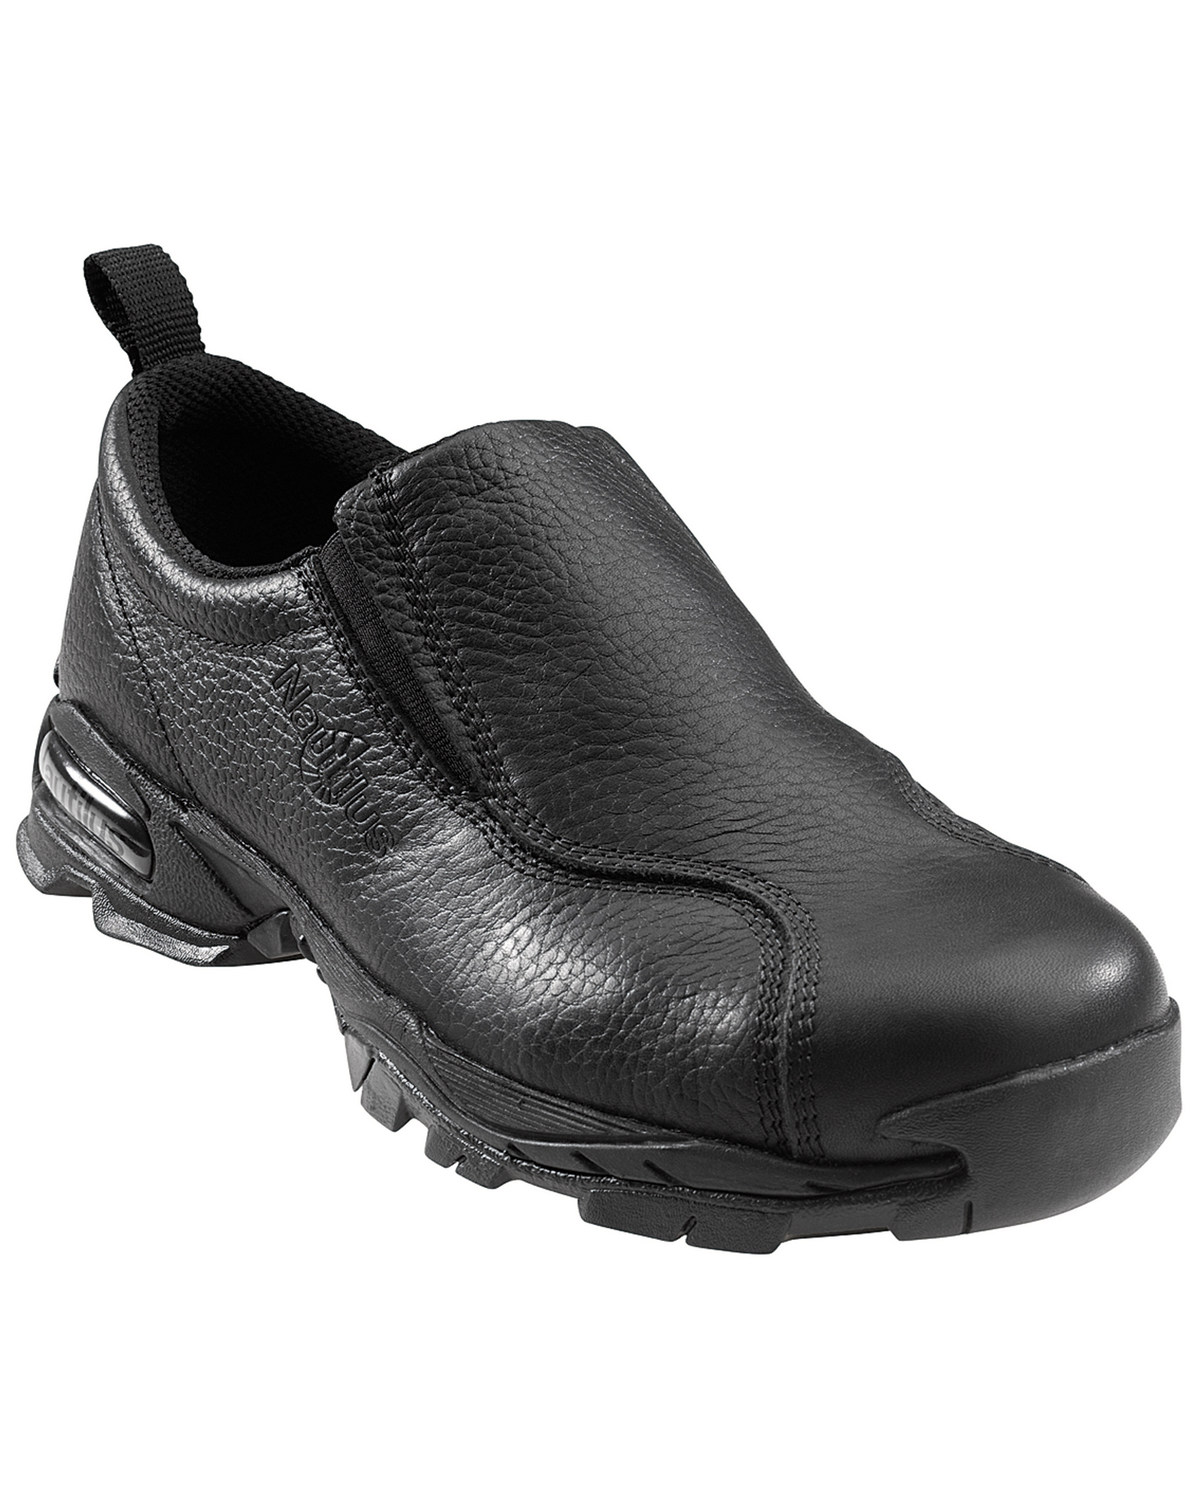 Nautilus Men's ESD Slip-On Work Shoes - Round Toe